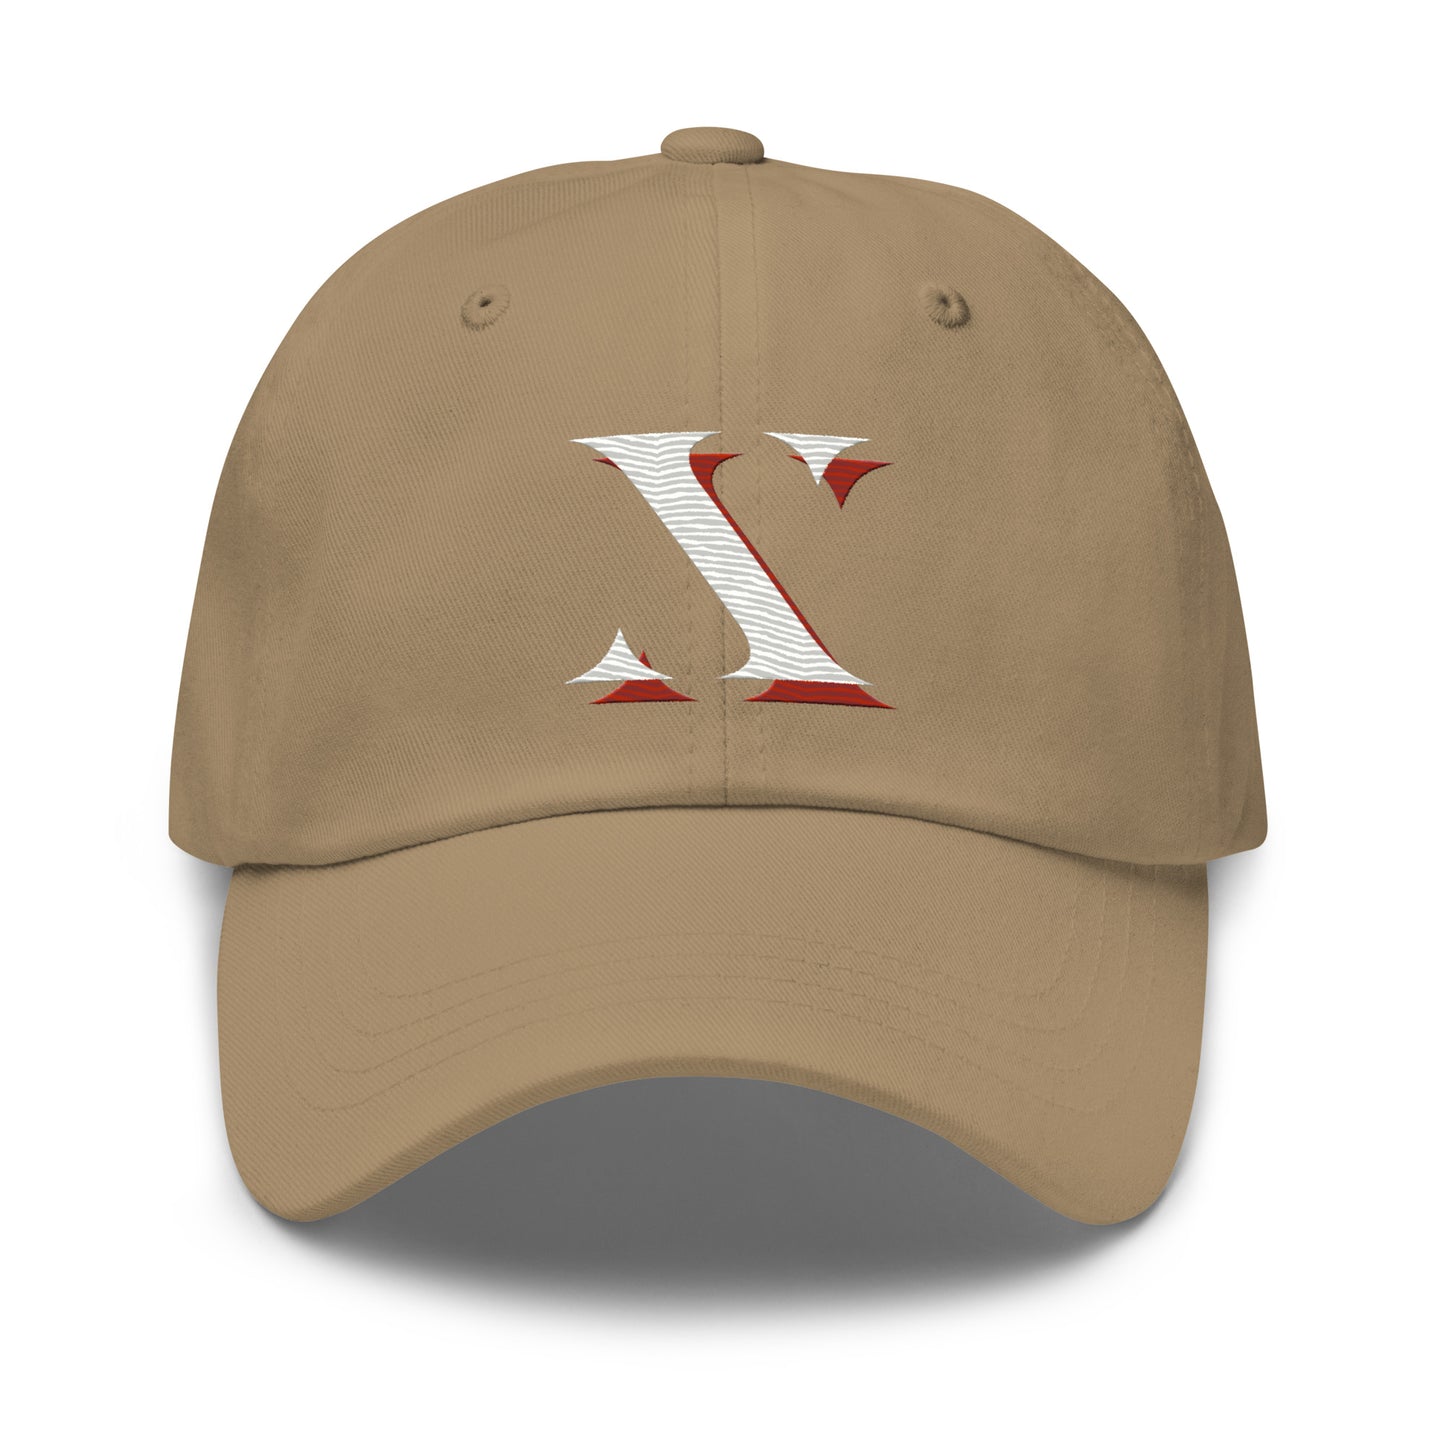 White "X" Prxphecy Dad Hat